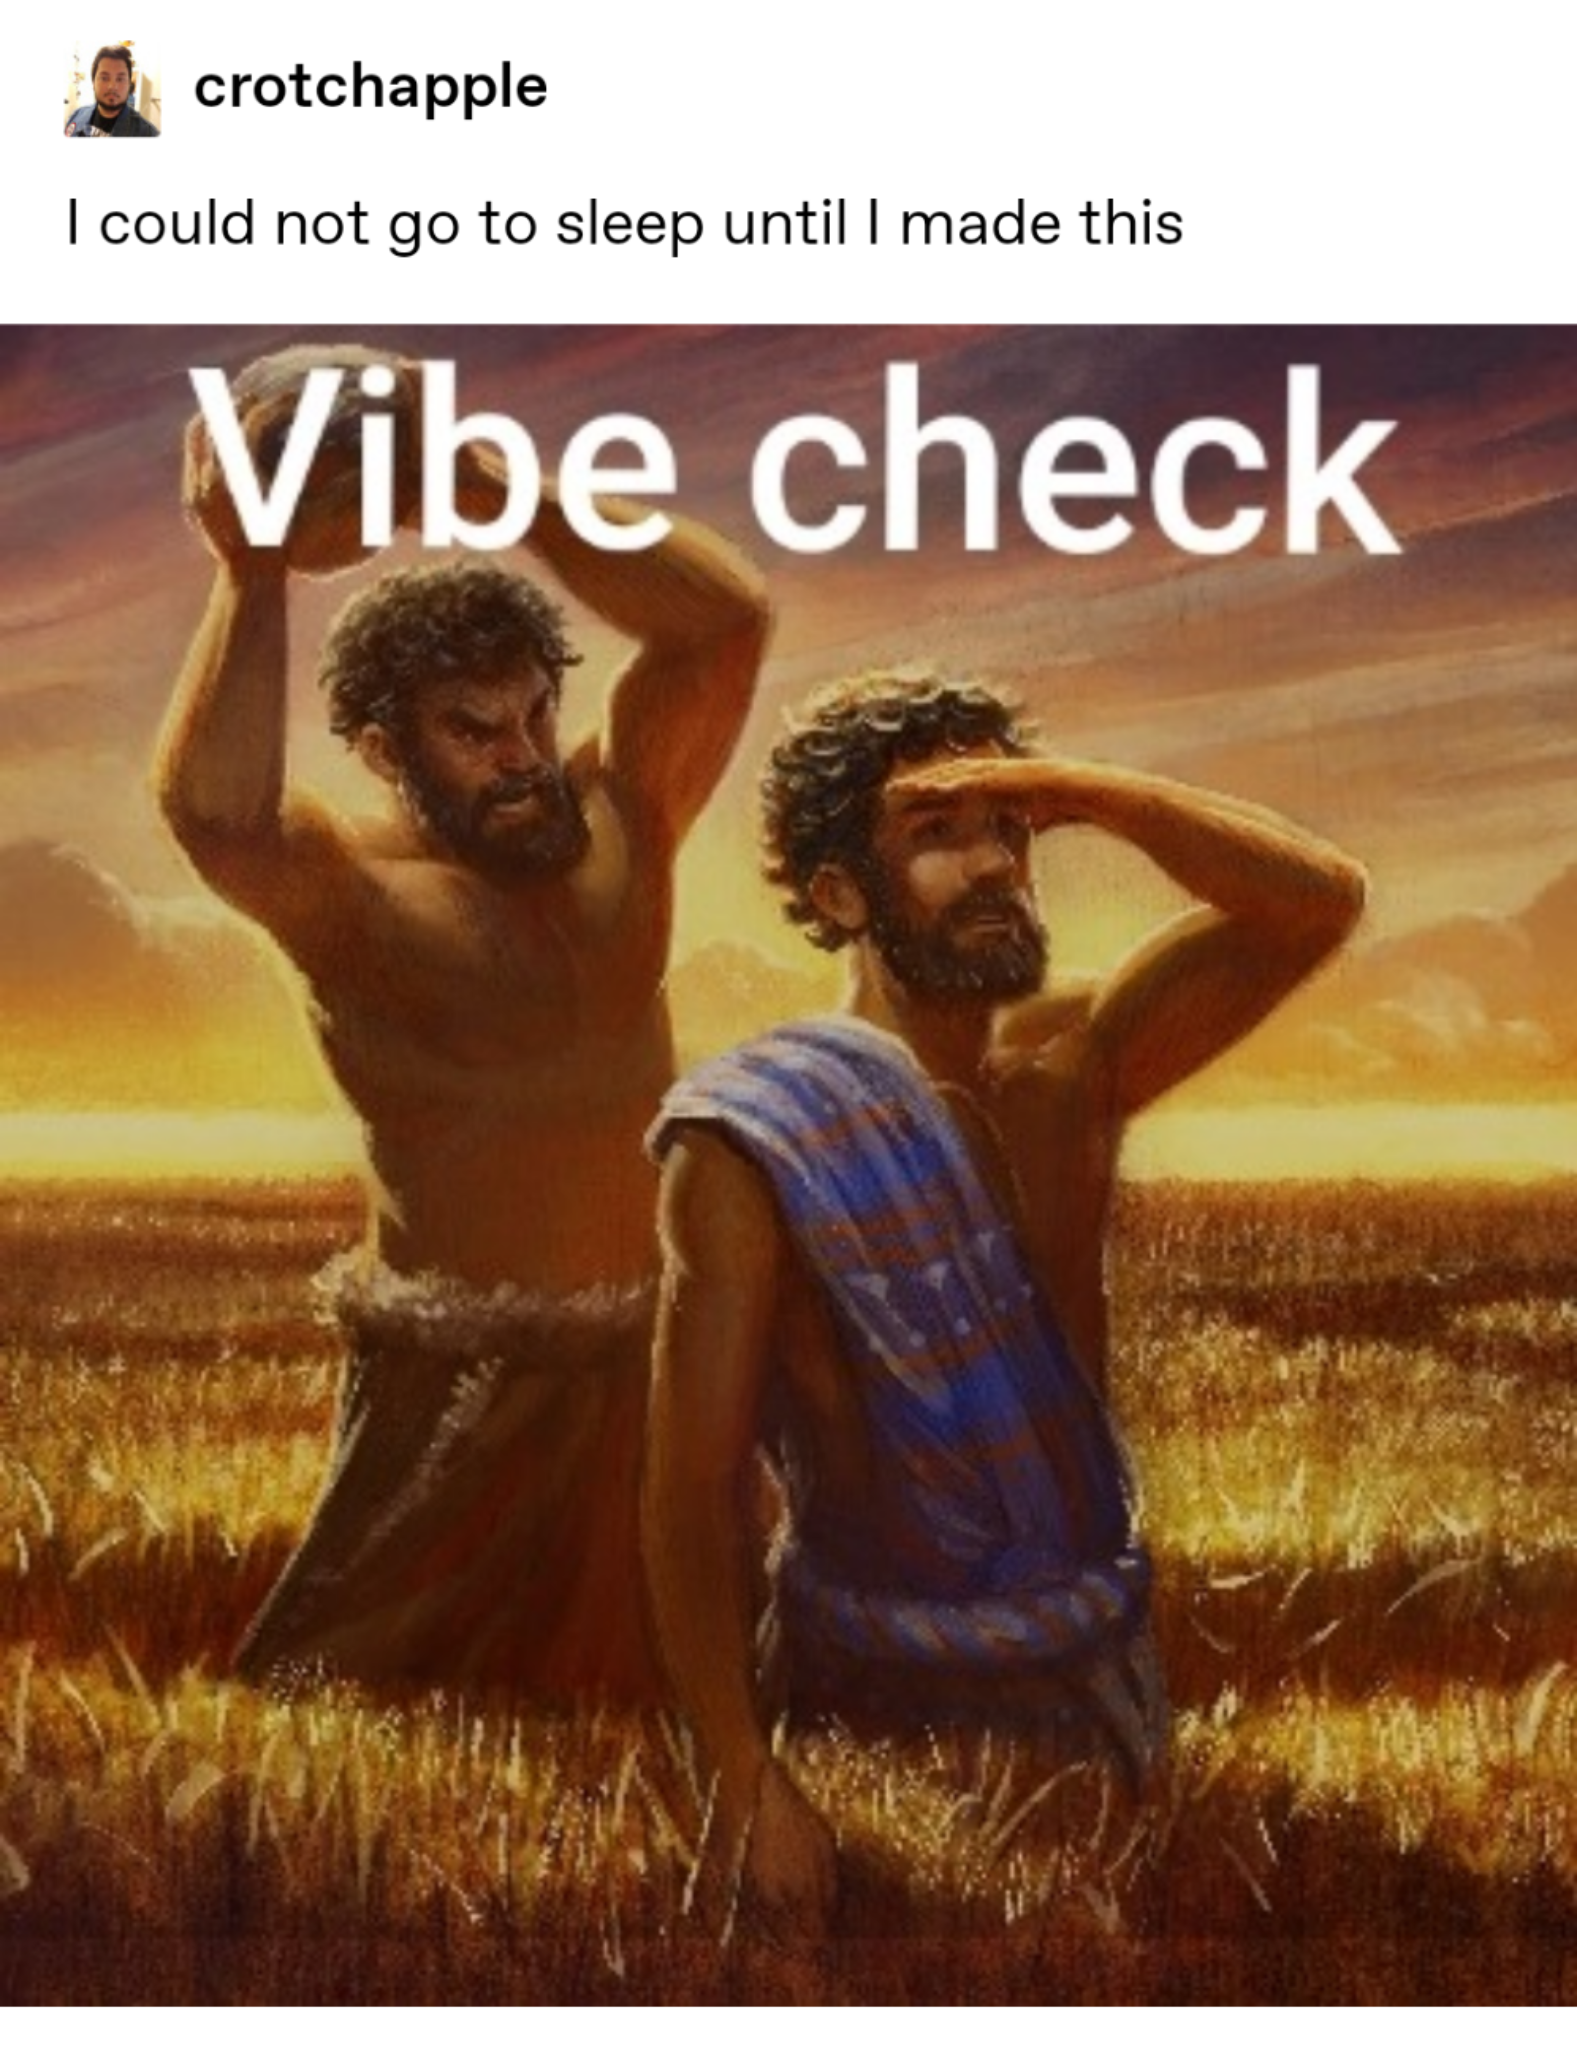 vibe check meme reddit